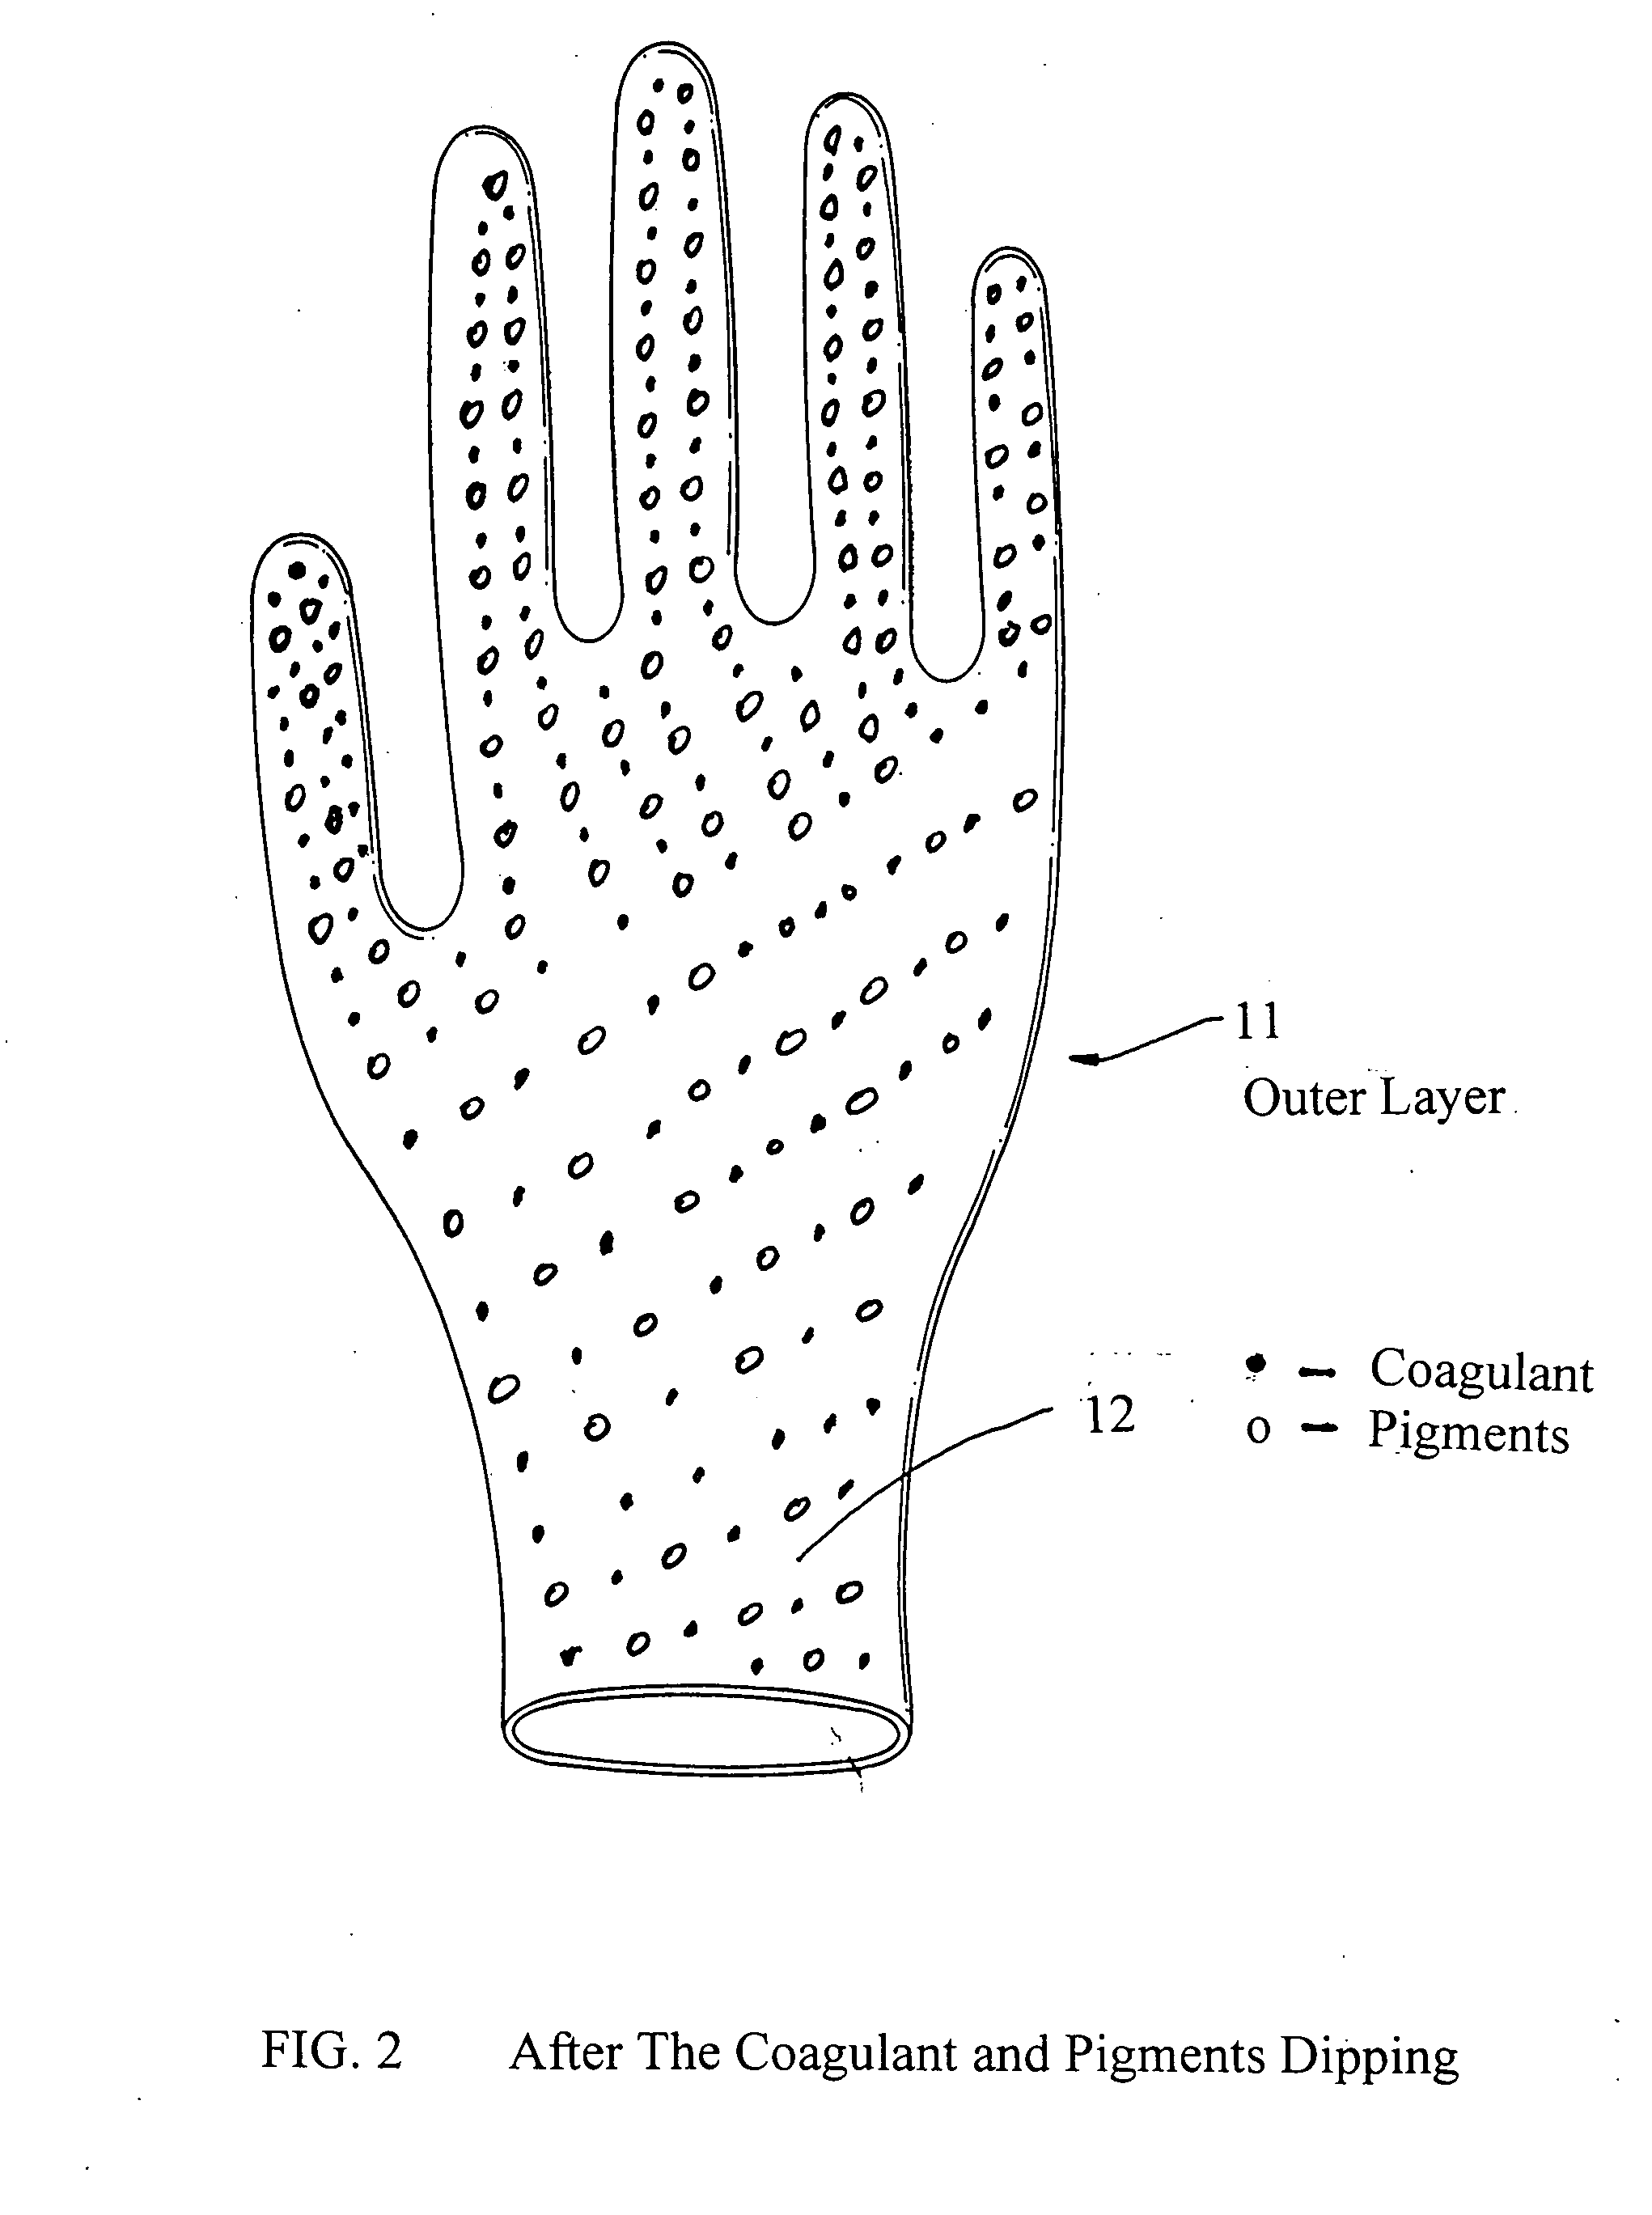 Multilayered gloves having enhanced barrier protection